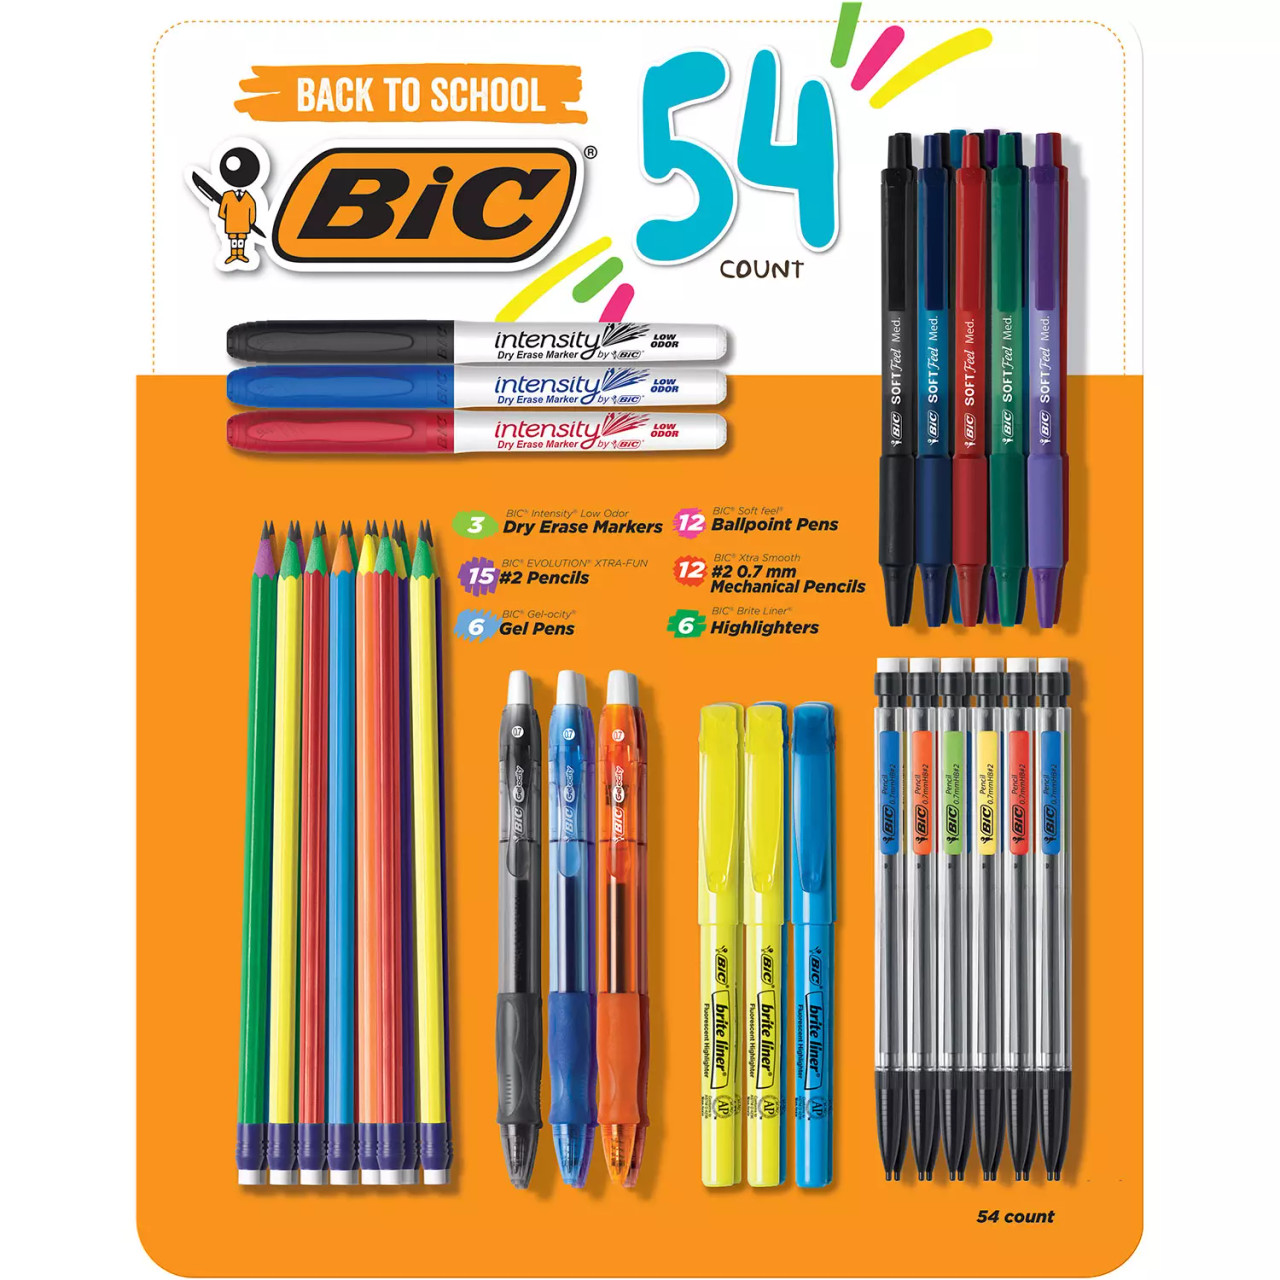 BIC Pen, Pencil, Briteliter, and Intensity Dry Erase Marker Variety Pack,  54 Ct